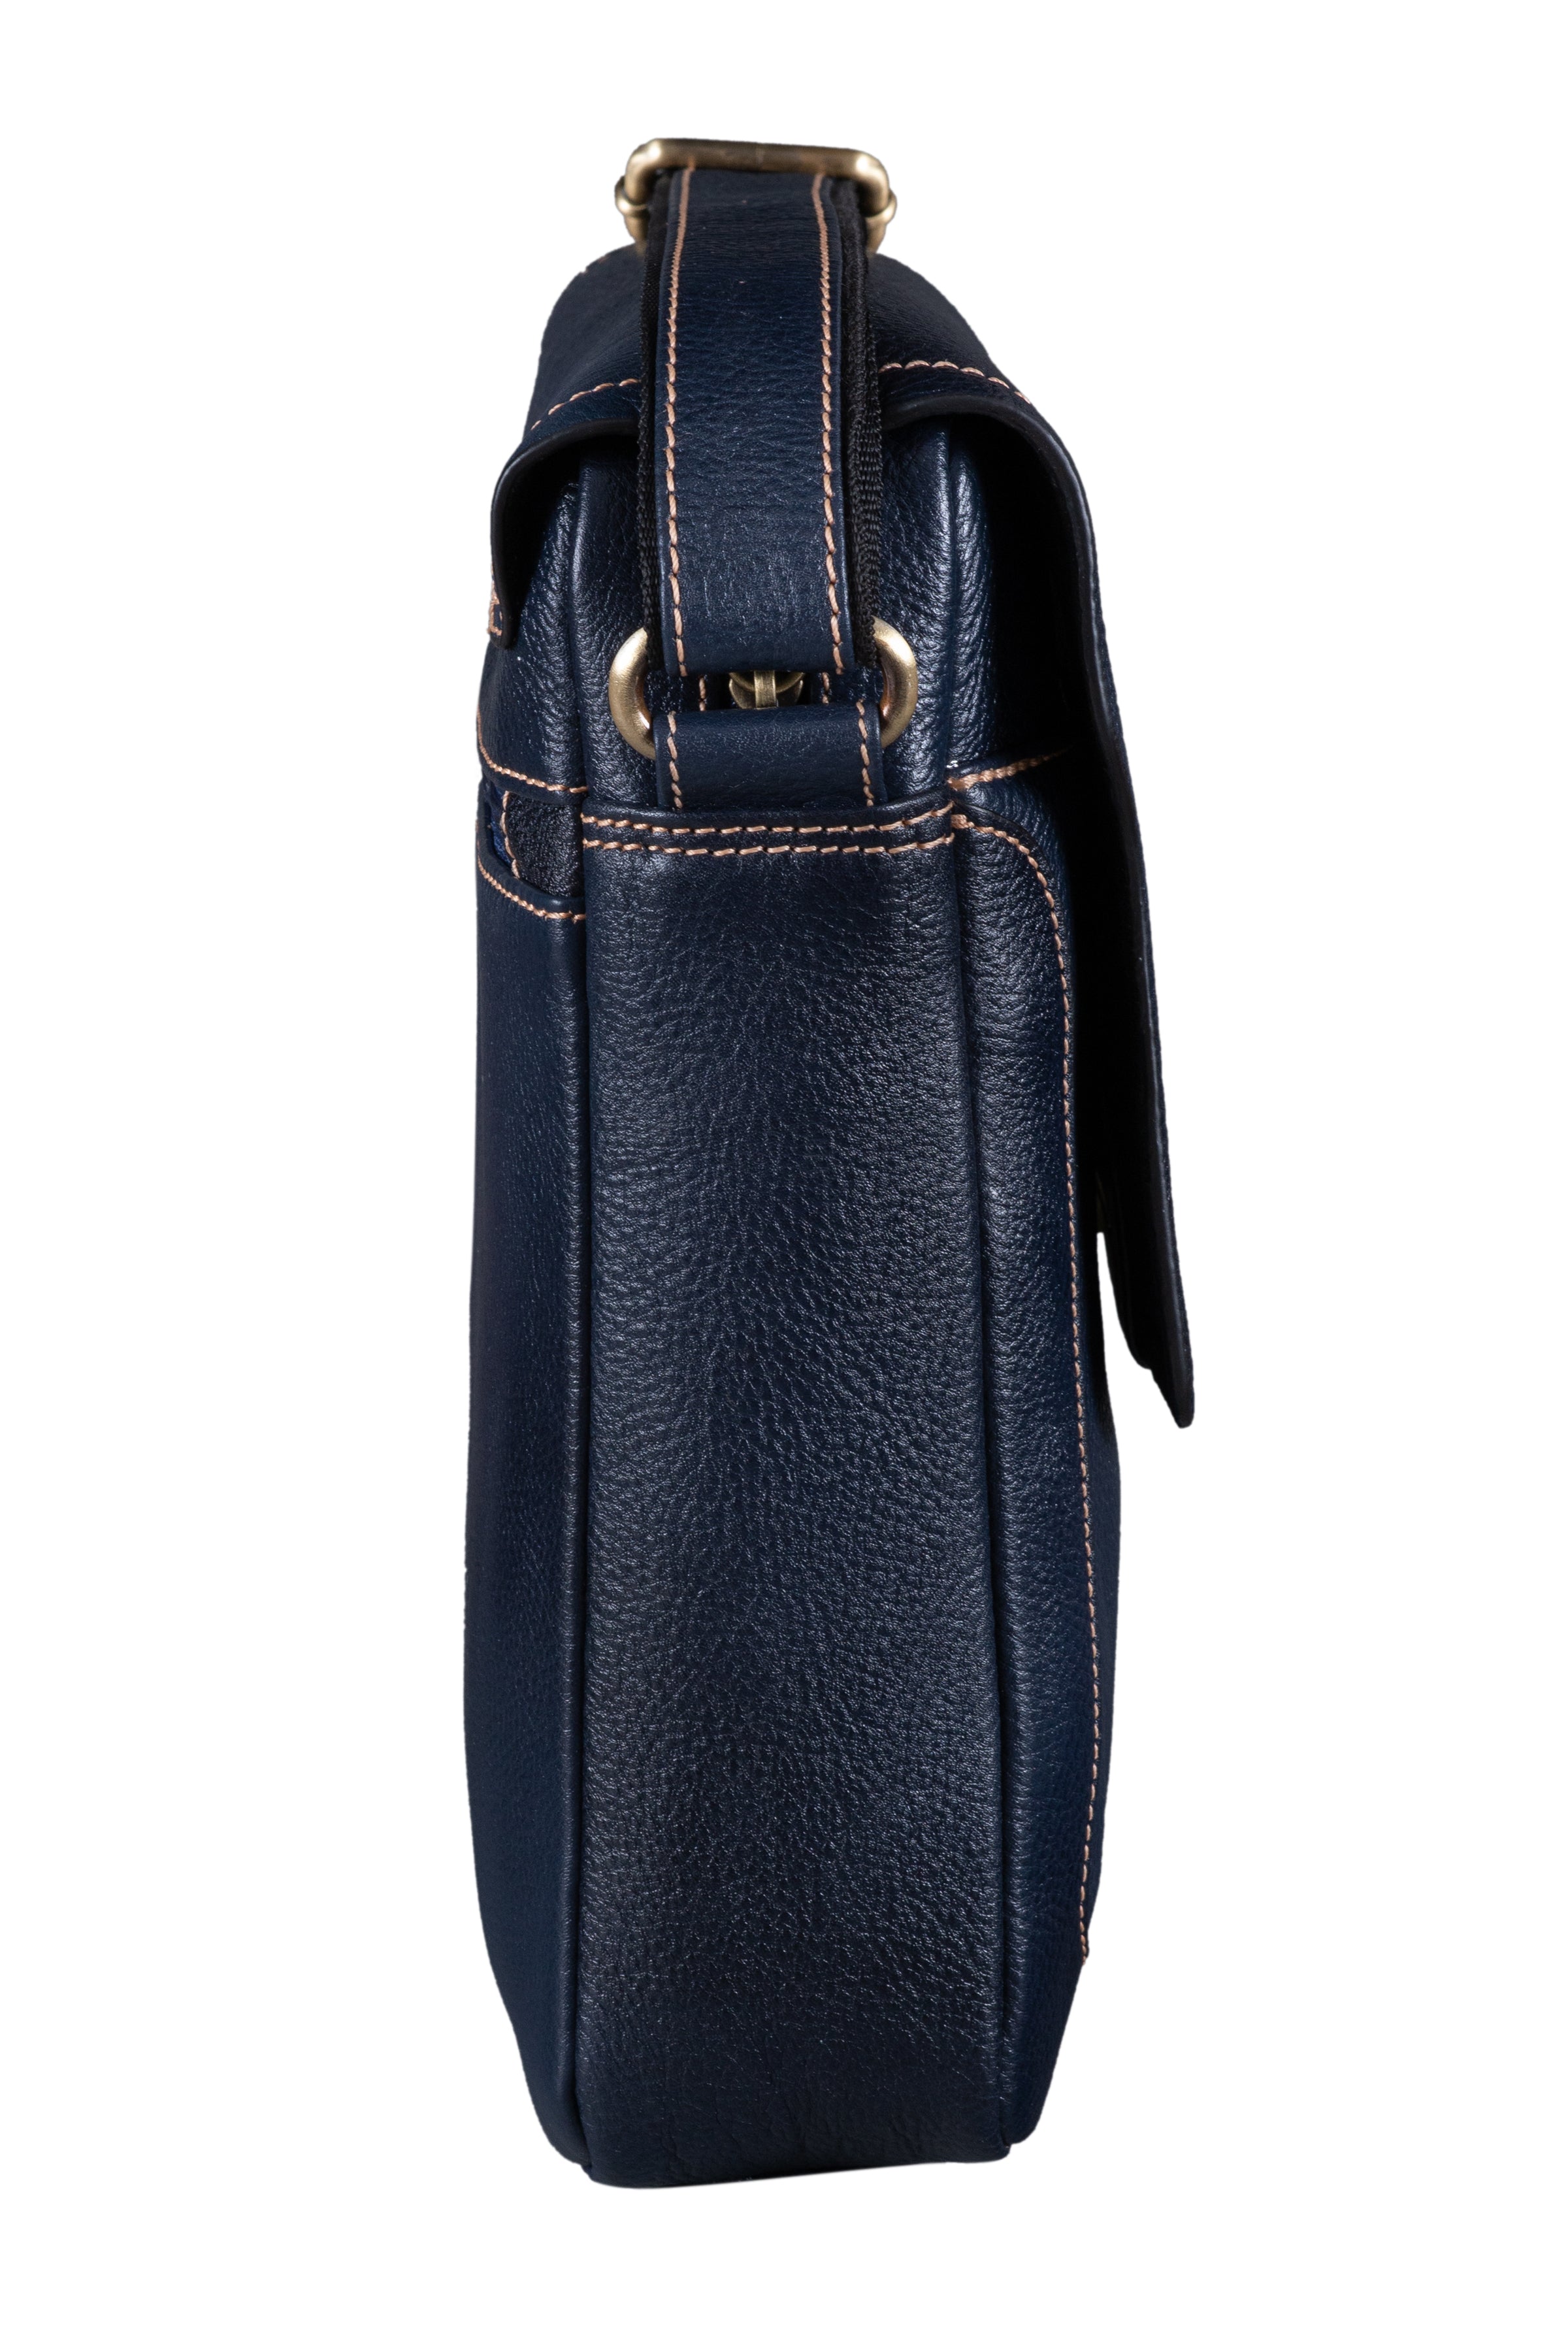 Genuine Leather Sling Bag Hiking Daypack A1339 – IVTG